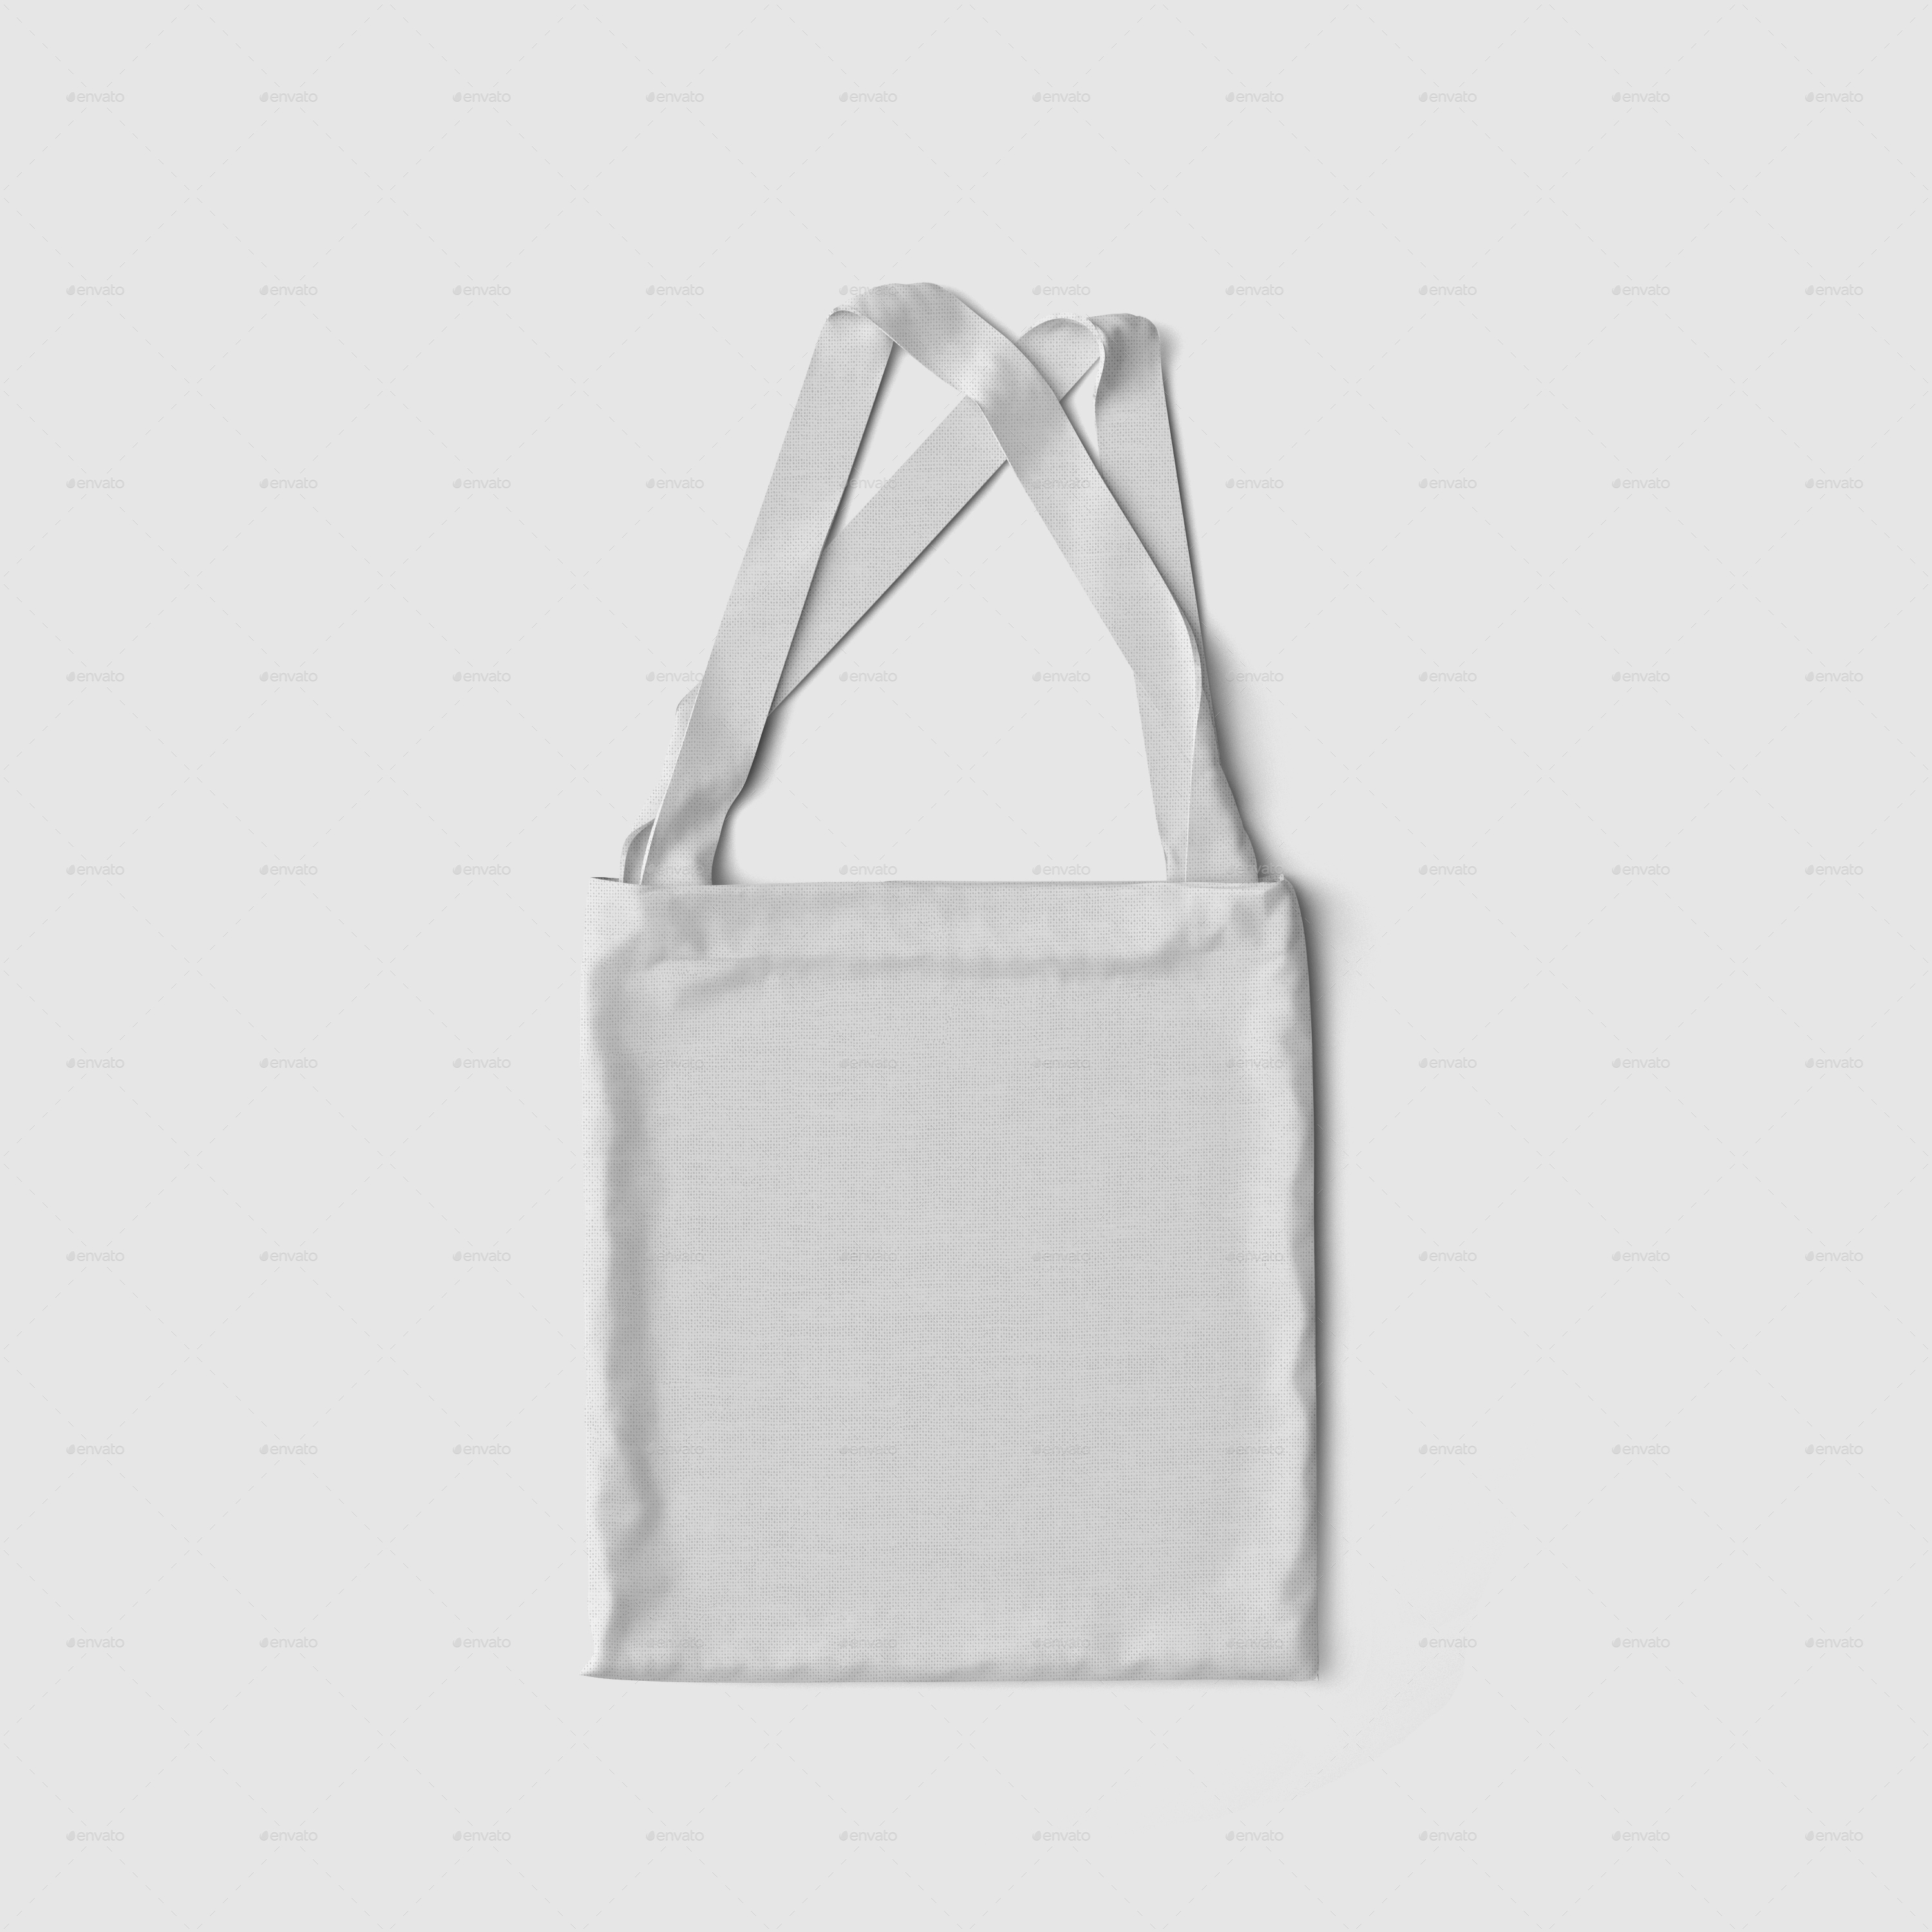 Download Eco Bag Mockup Psd Free - DesaignHandbags